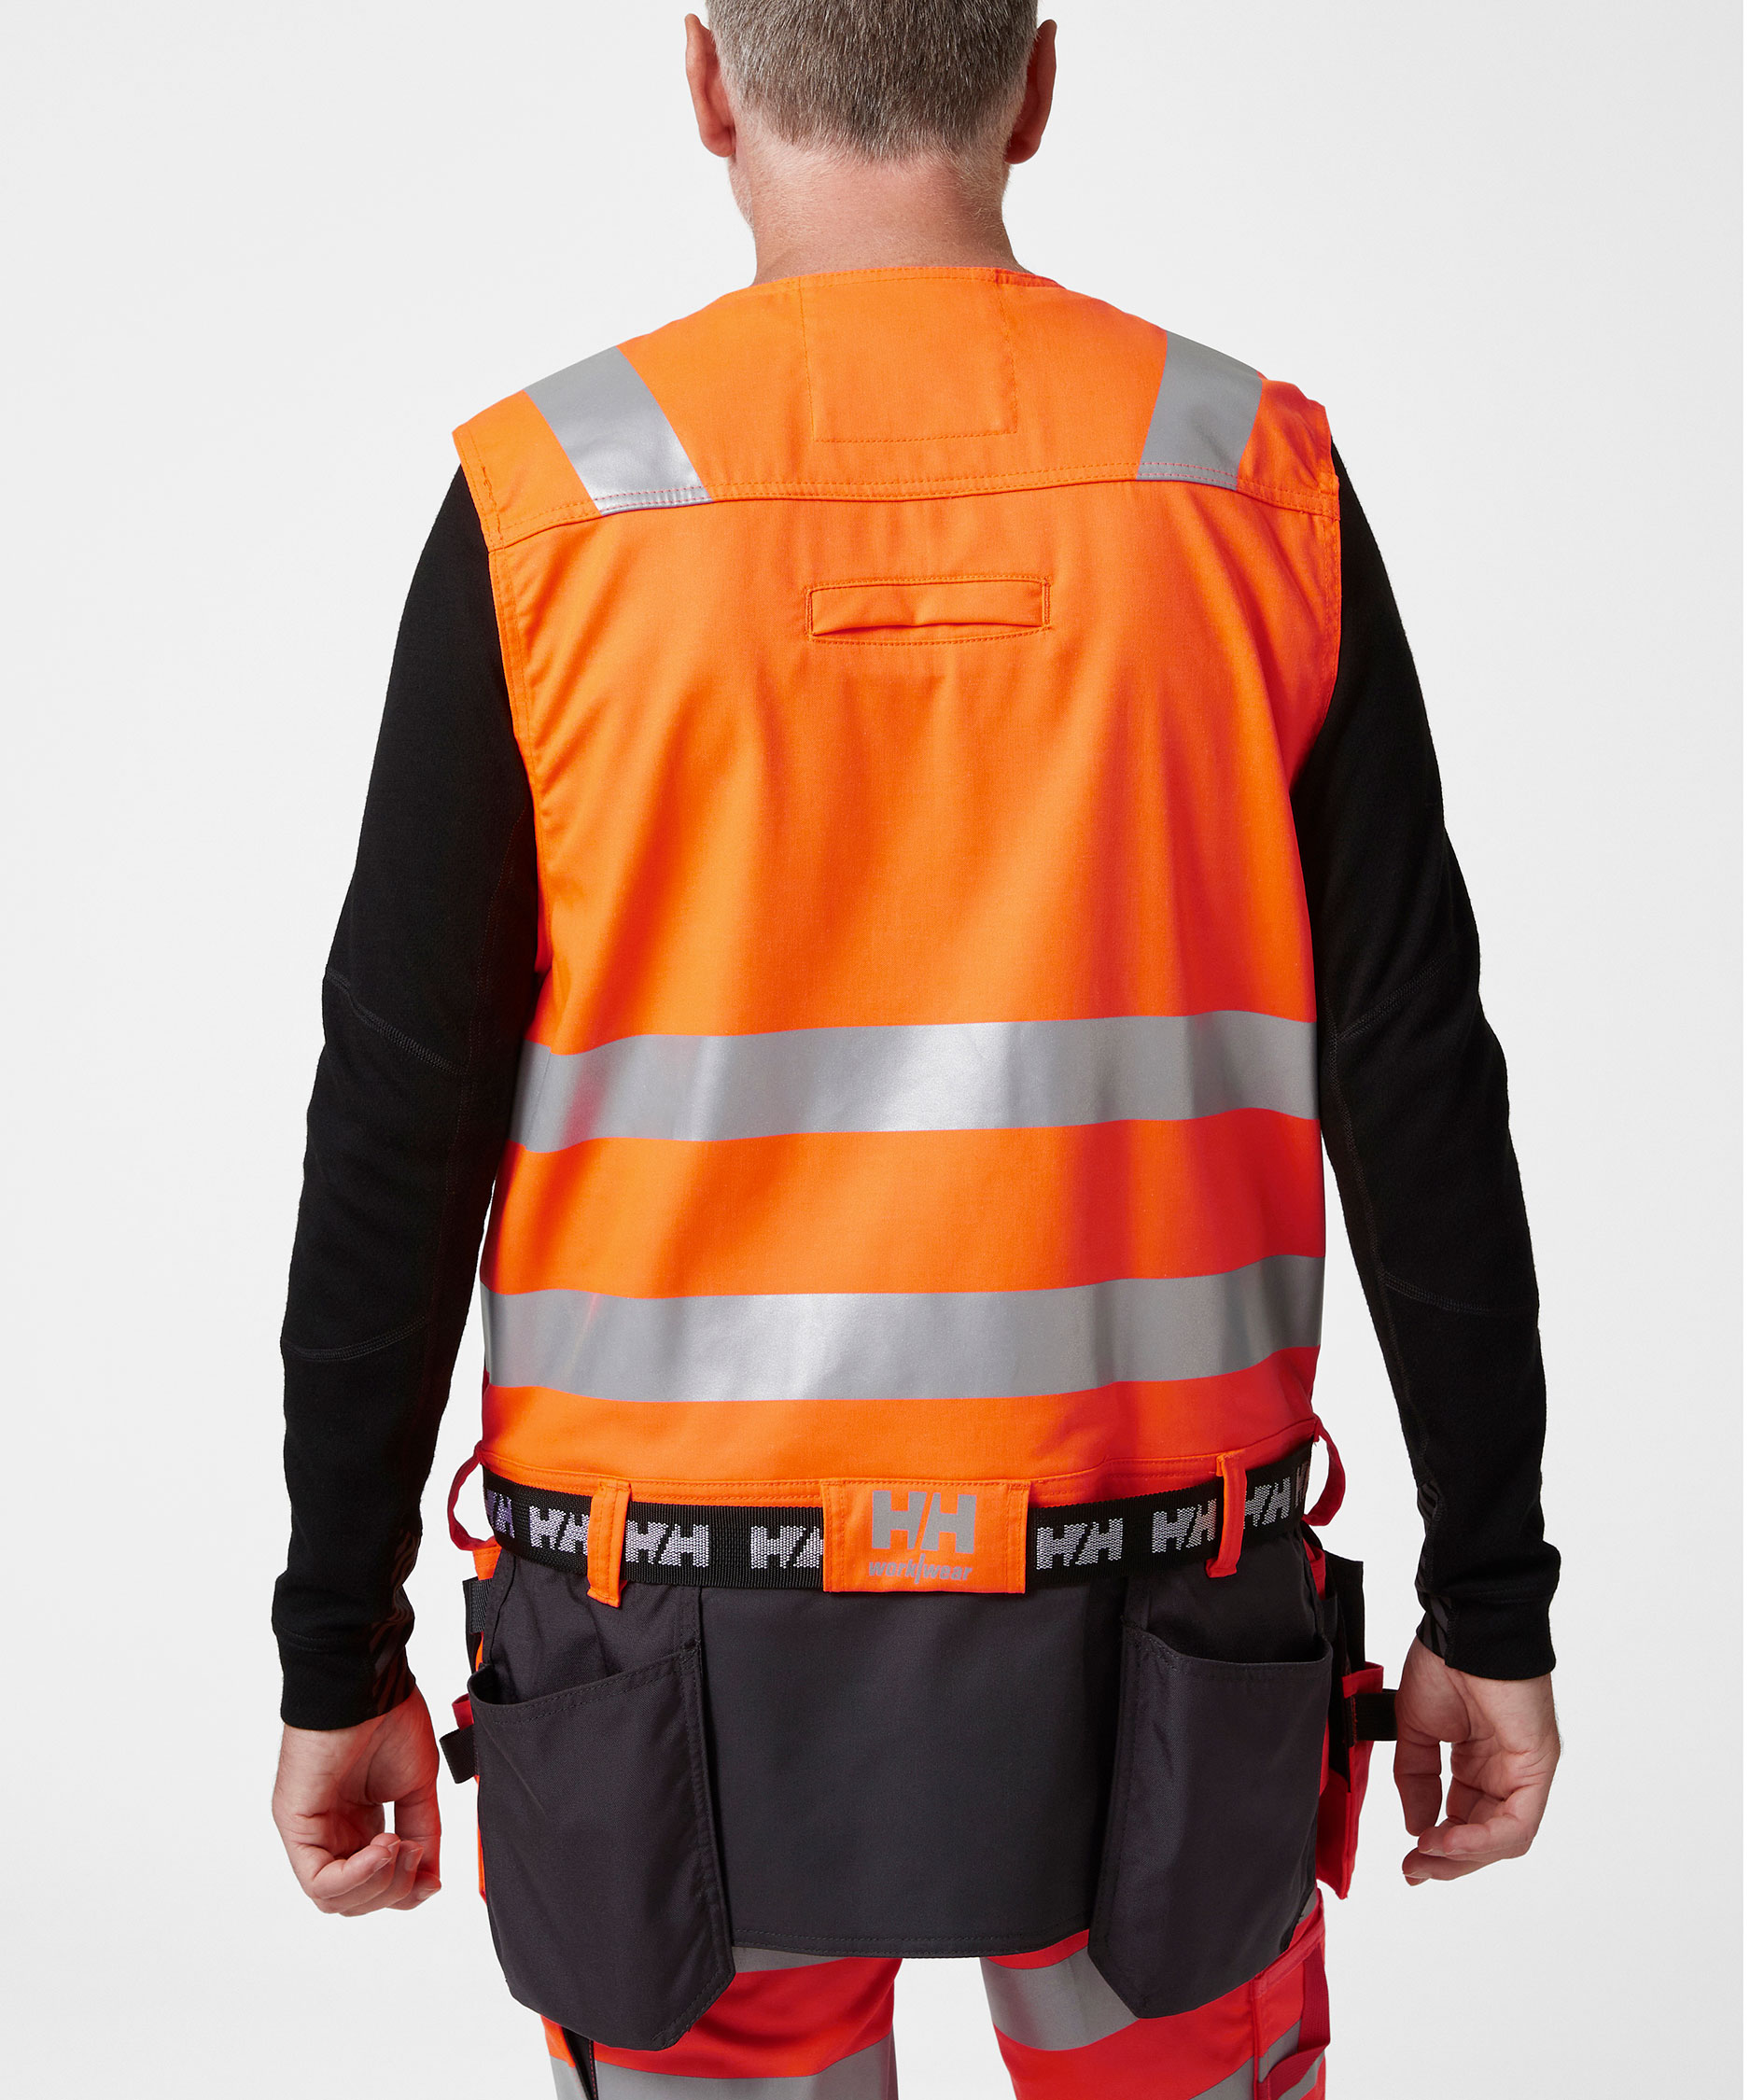 Buy Helly Hansen Alna 2.0 tool vest at Cheap-workwear.com